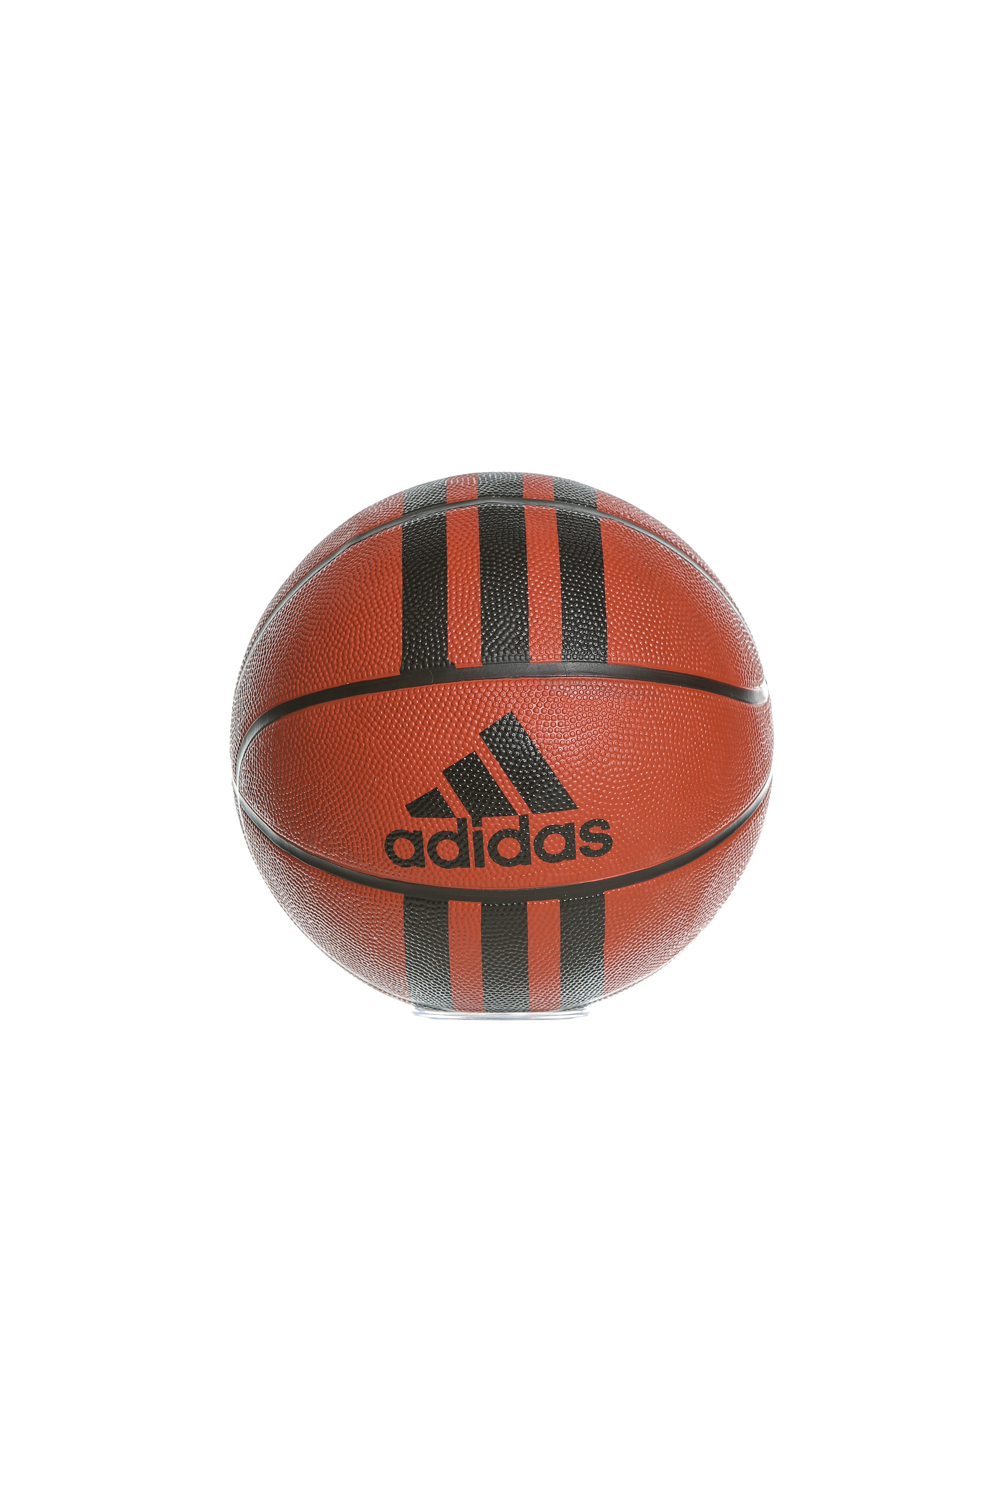 adidas Performance – Μπαλα μπασκετ για παιδια adidas STRIPE D 29.5